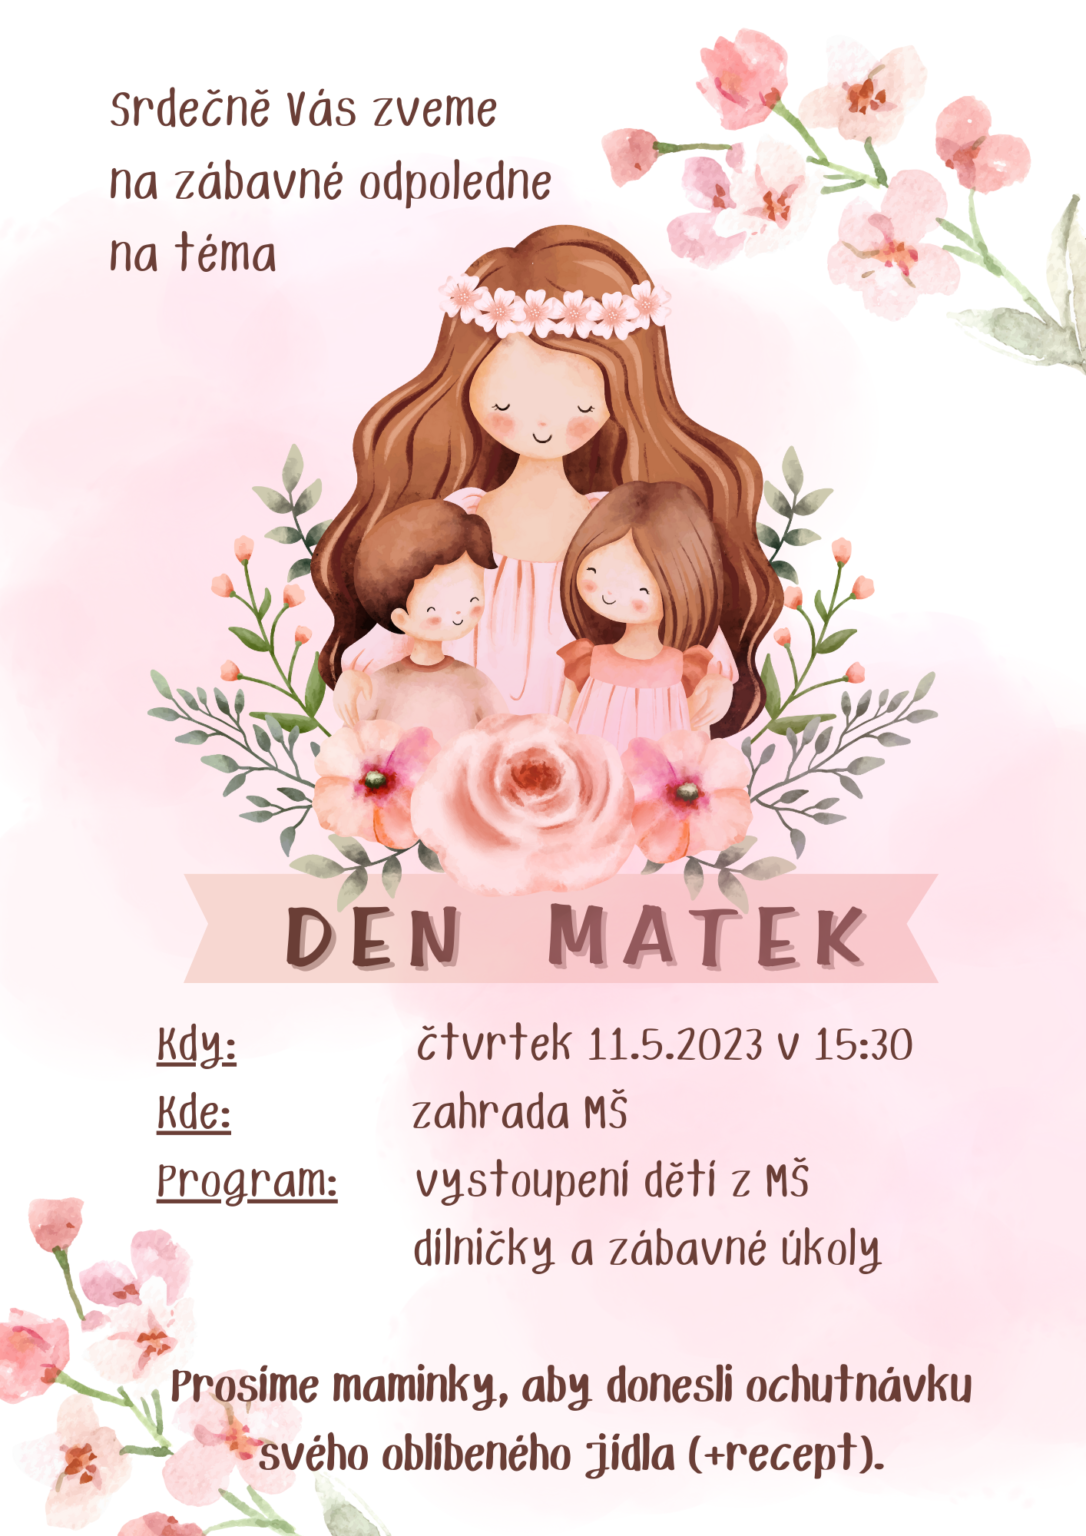 DEN-MATEK-1086x1536.png